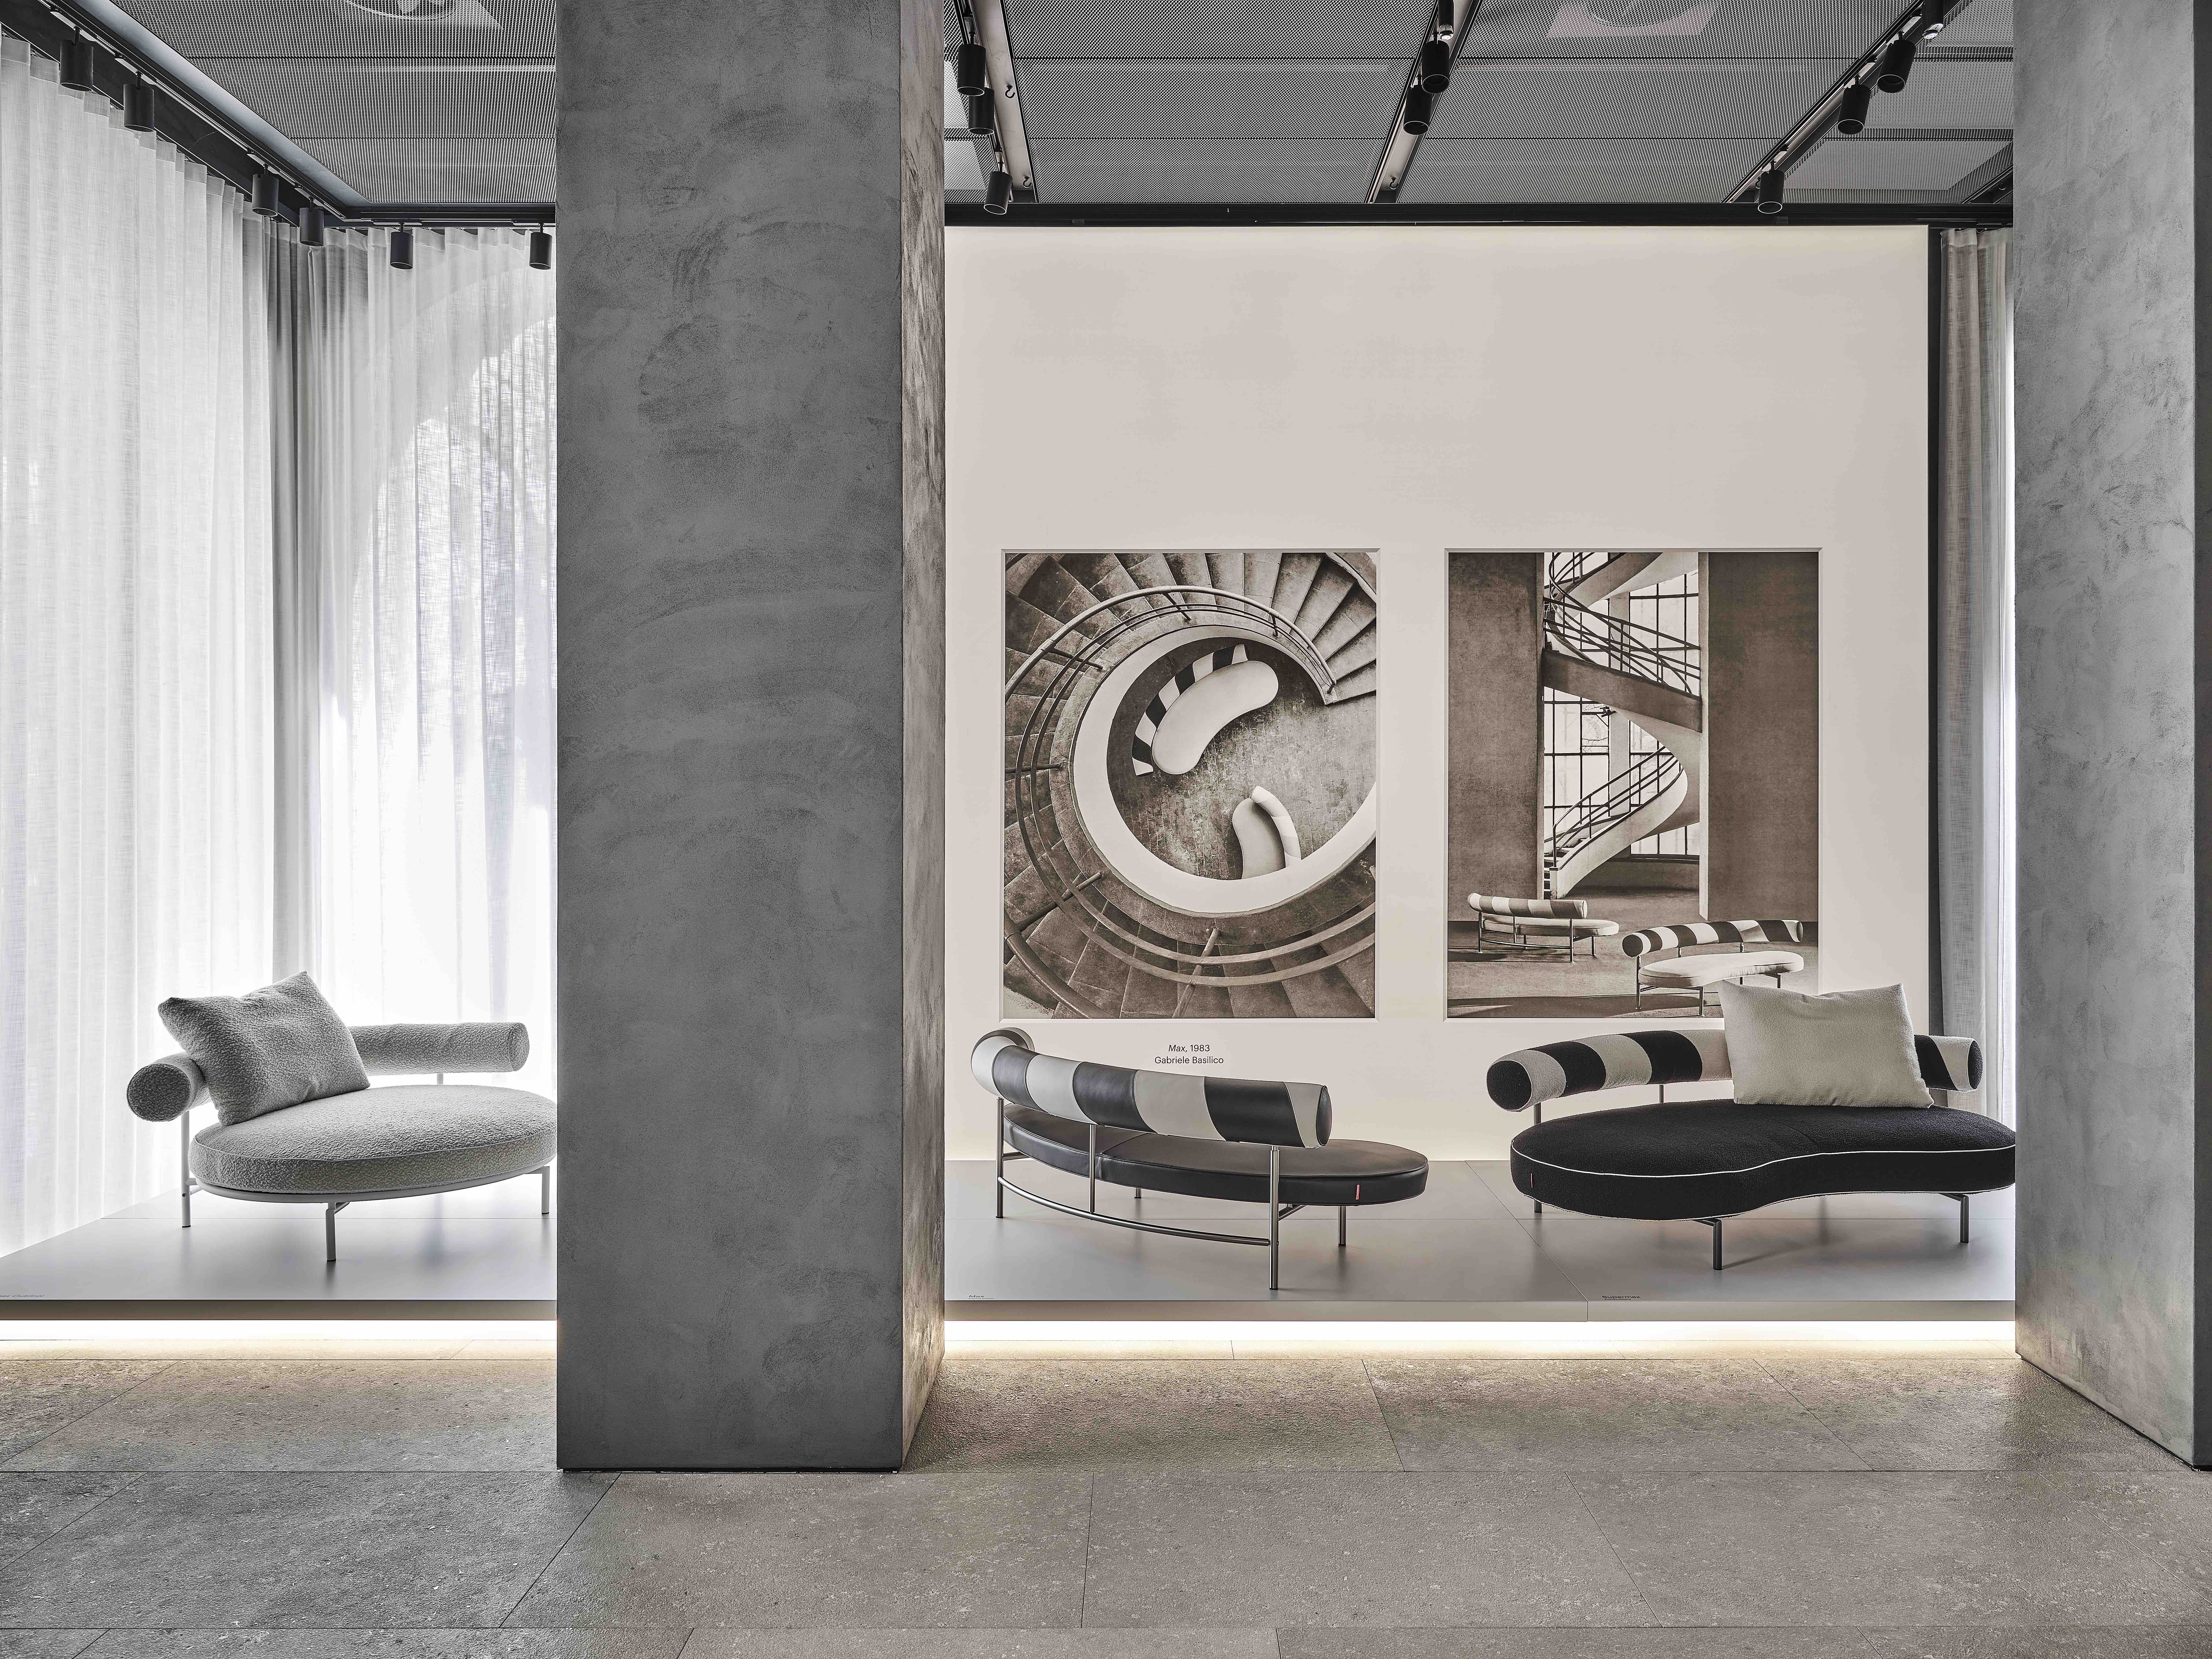 The top five Milan Design Week store transformations